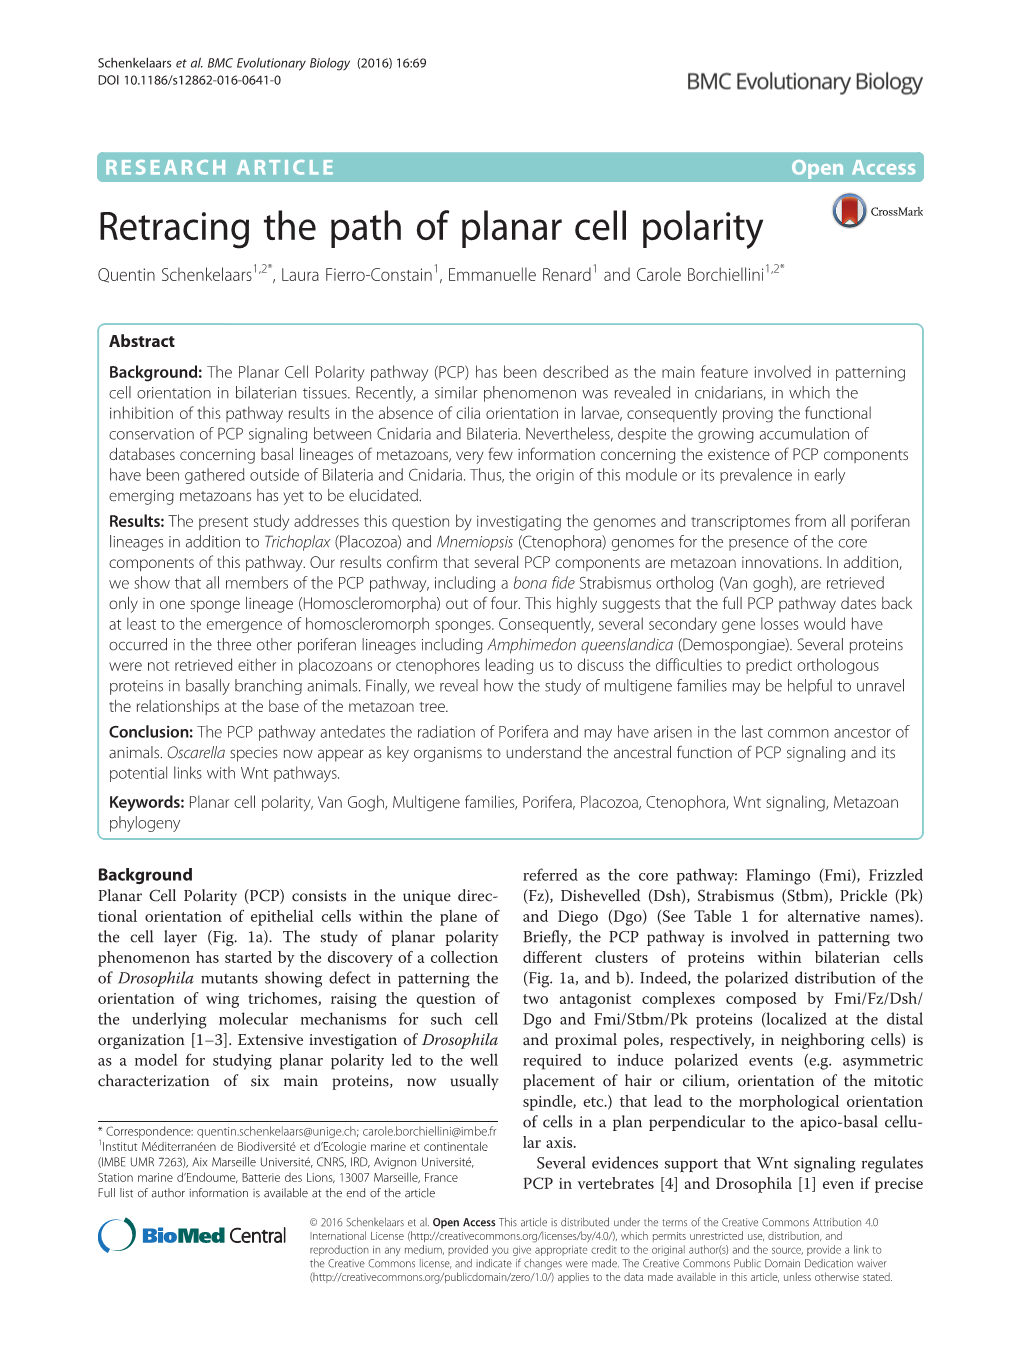 Retracing the Path of Planar Cell Polarity Quentin Schenkelaars1,2*, Laura Fierro-Constain1, Emmanuelle Renard1 and Carole Borchiellini1,2*